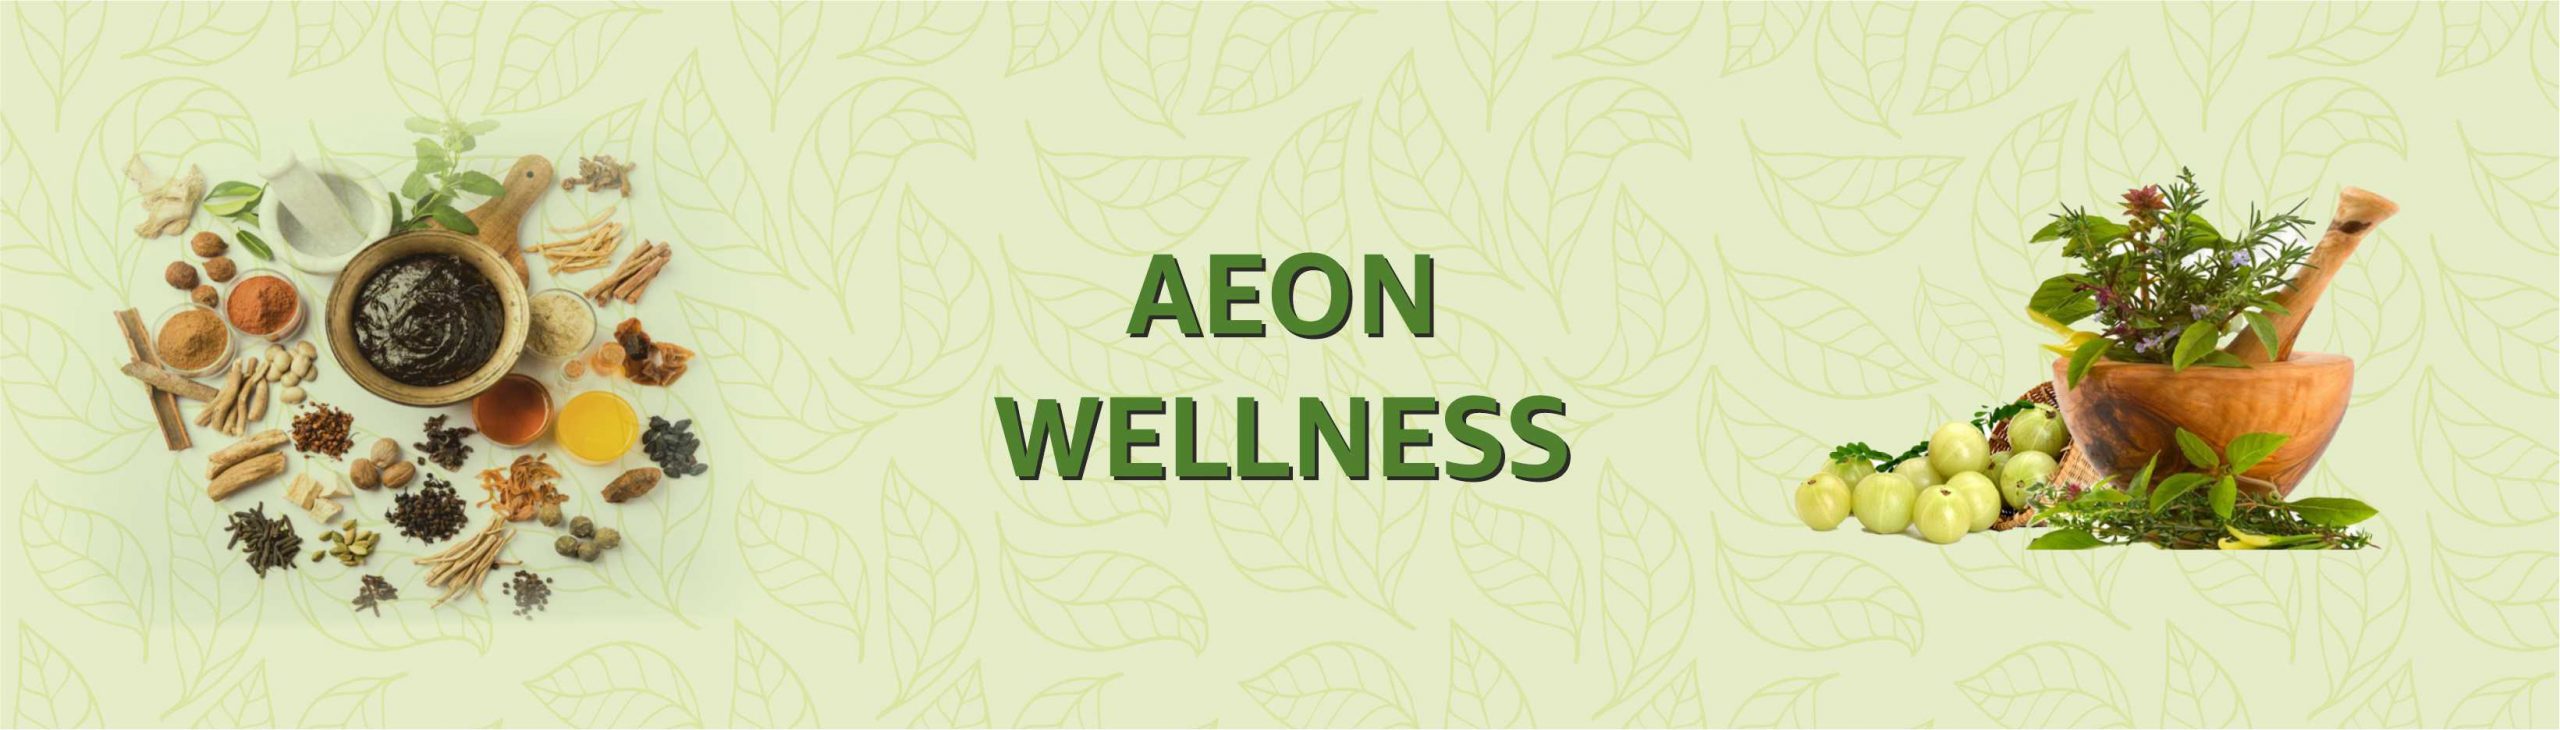 Aeon wellness 2